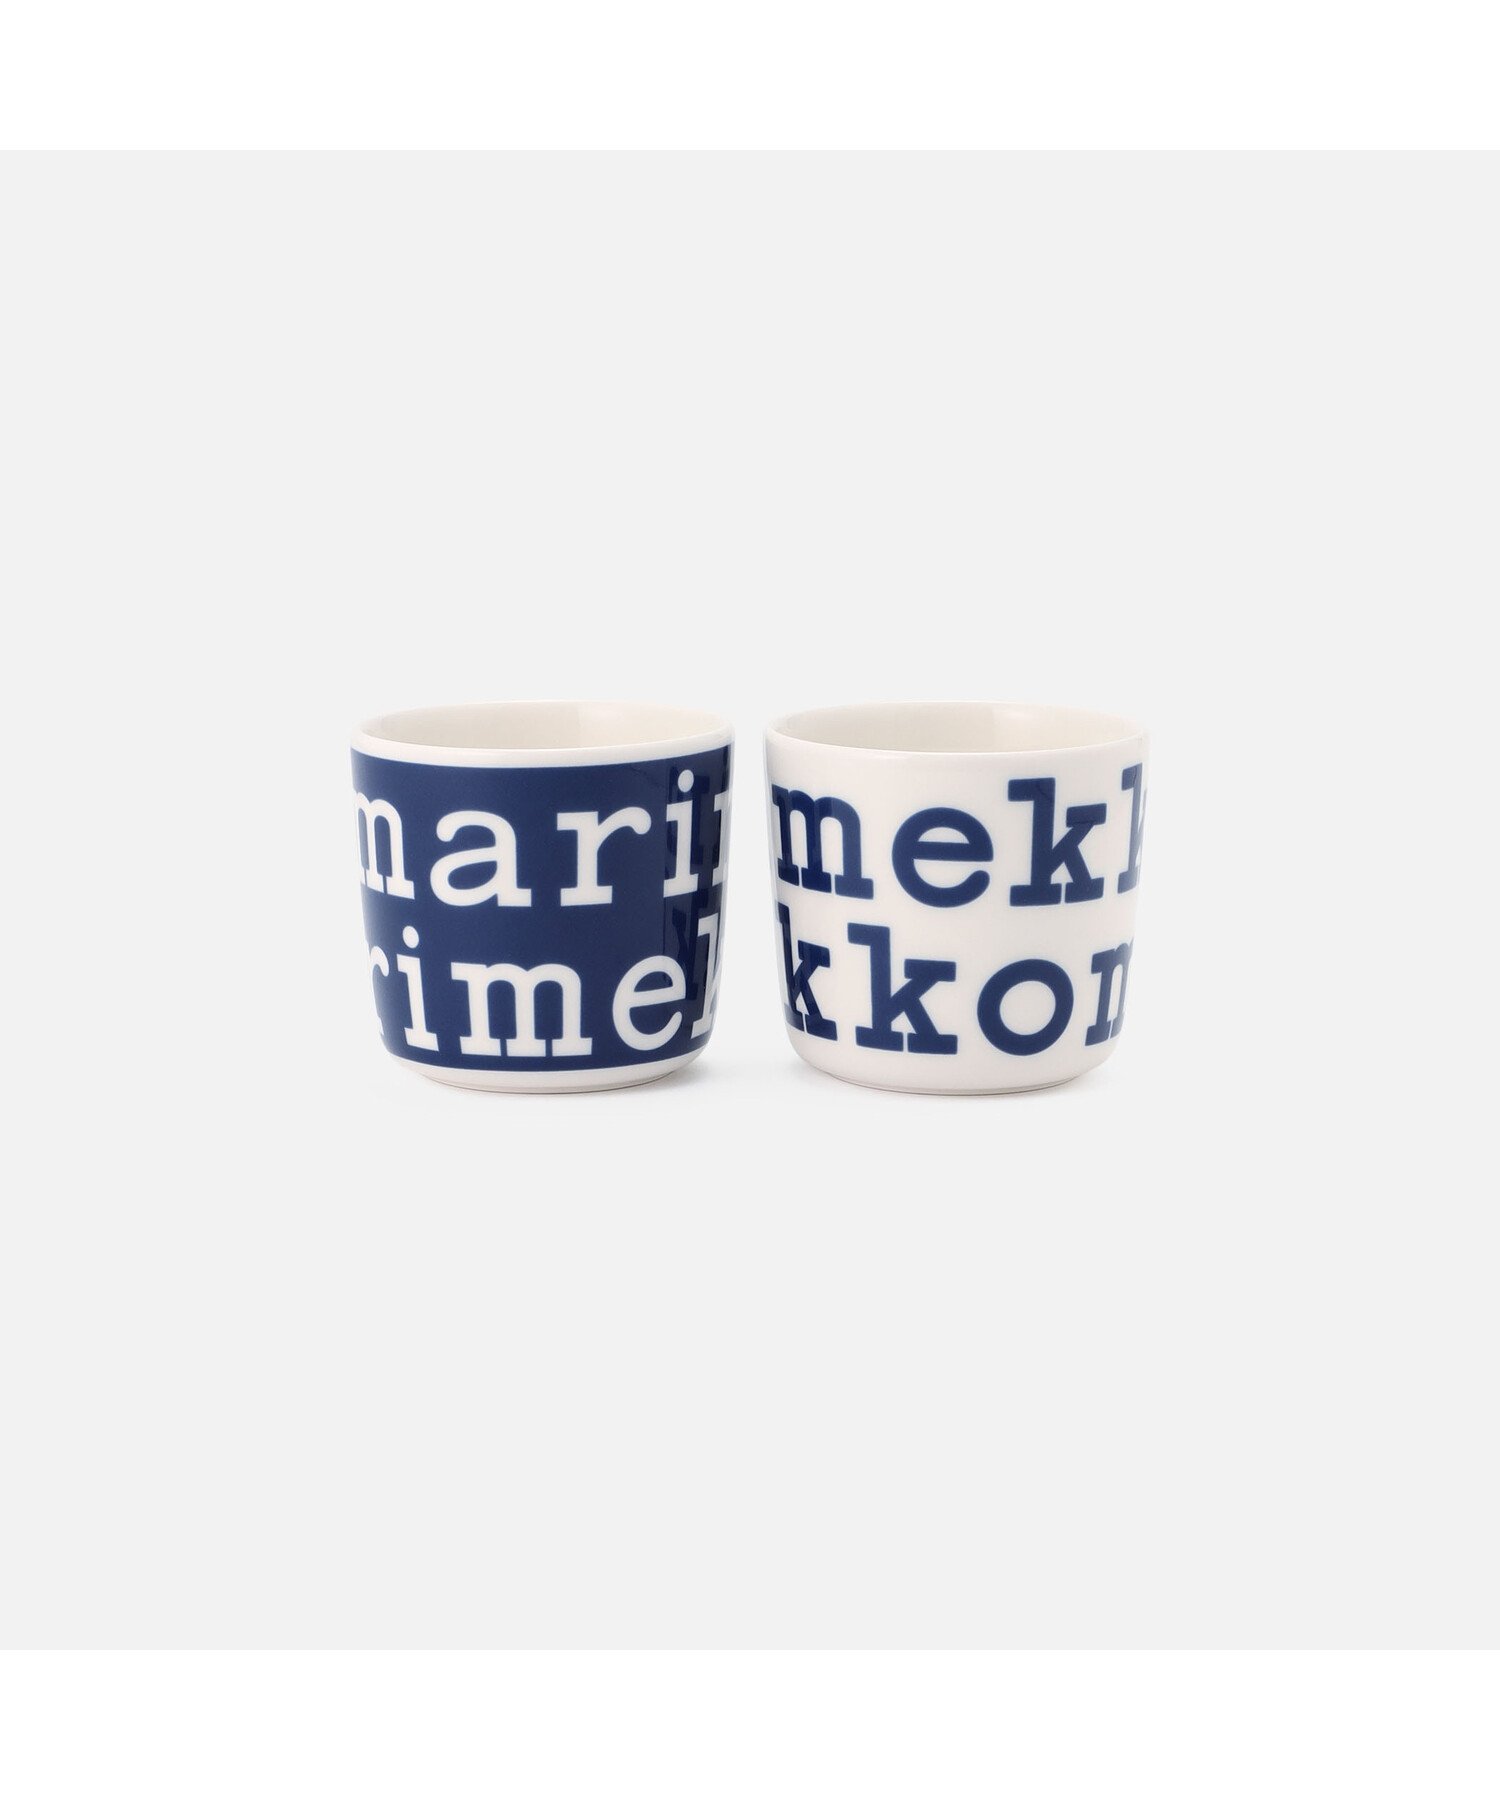 Marimekko 【日本限定】Marimekko Logo コーヒーカップセット(ハンドルなし) マリ...